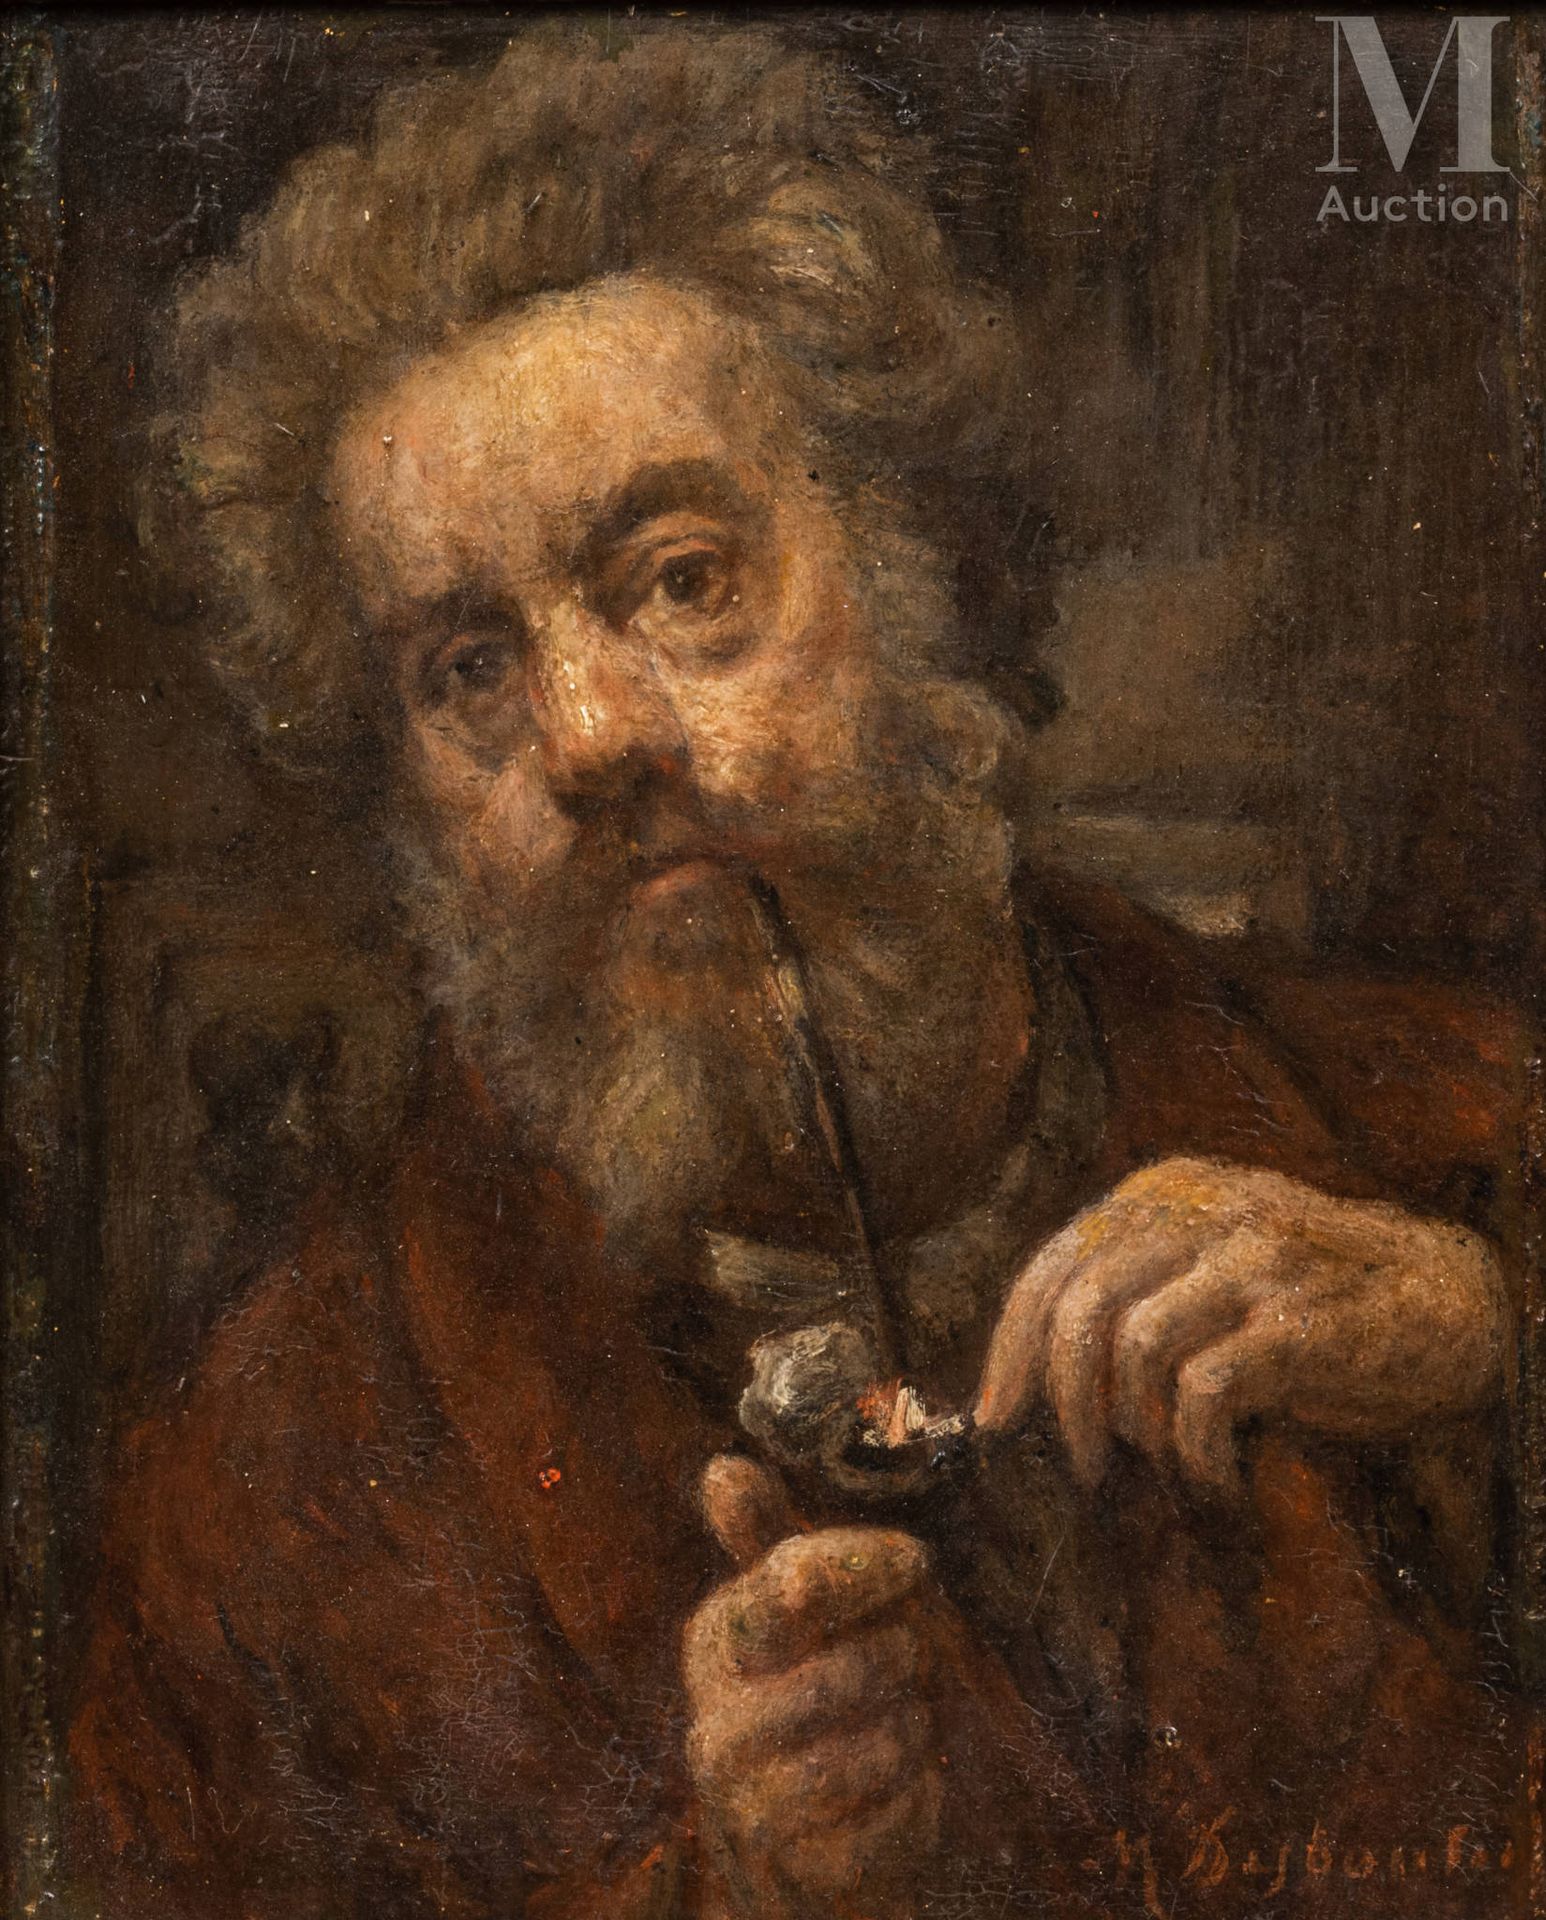 École russe de XIXe siècle. Retrato de un hombre fumando en pipa. 

Óleo sobre t&hellip;